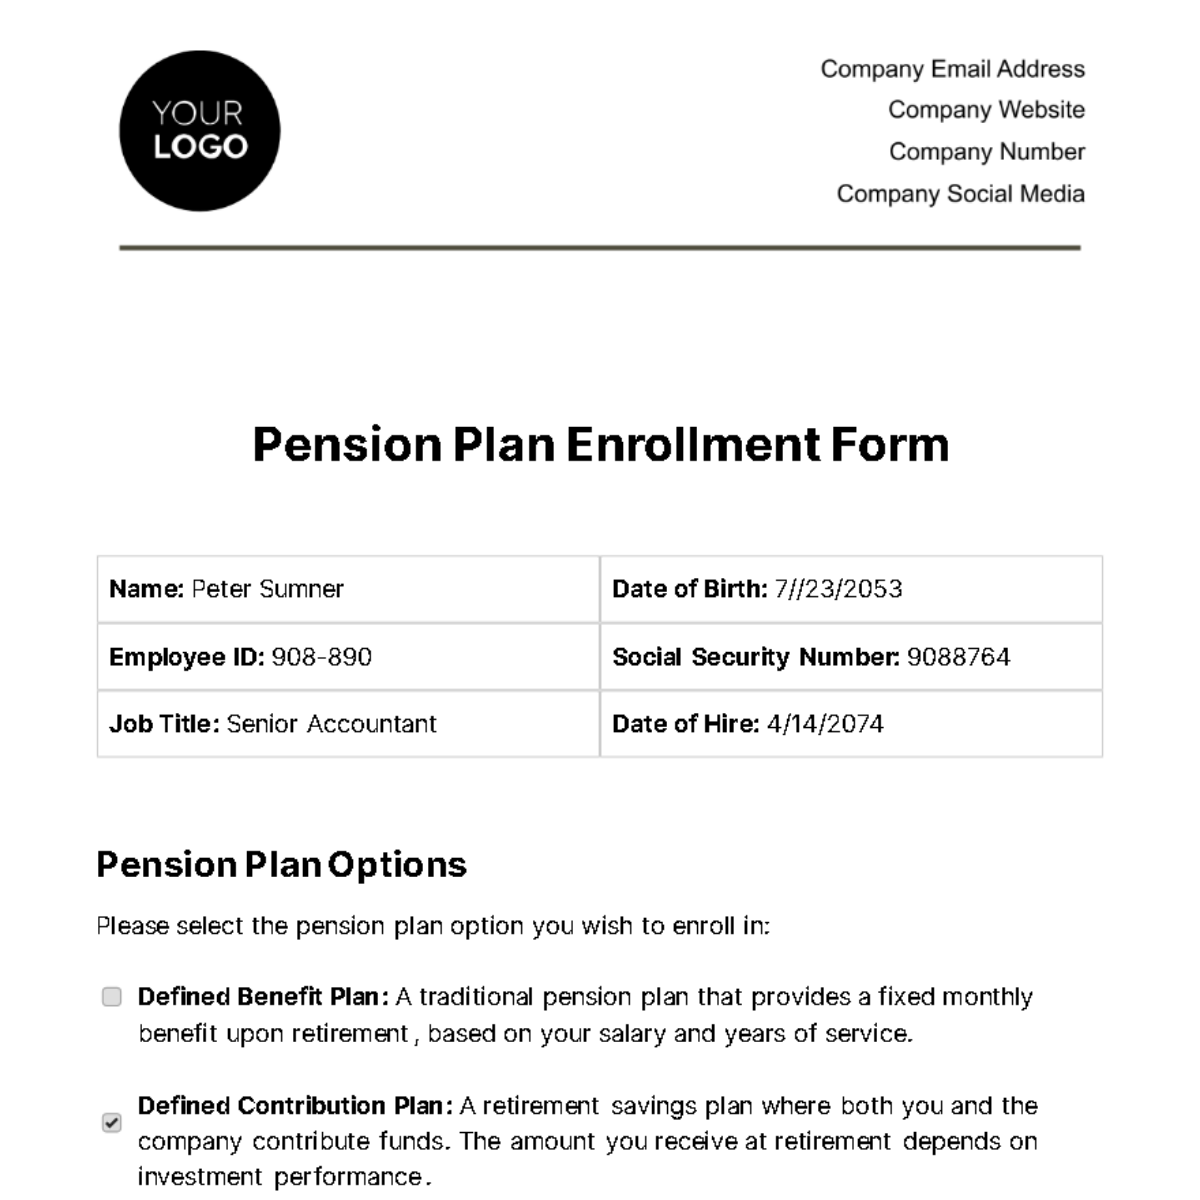 Pension Plan Enrollment Form HR Template